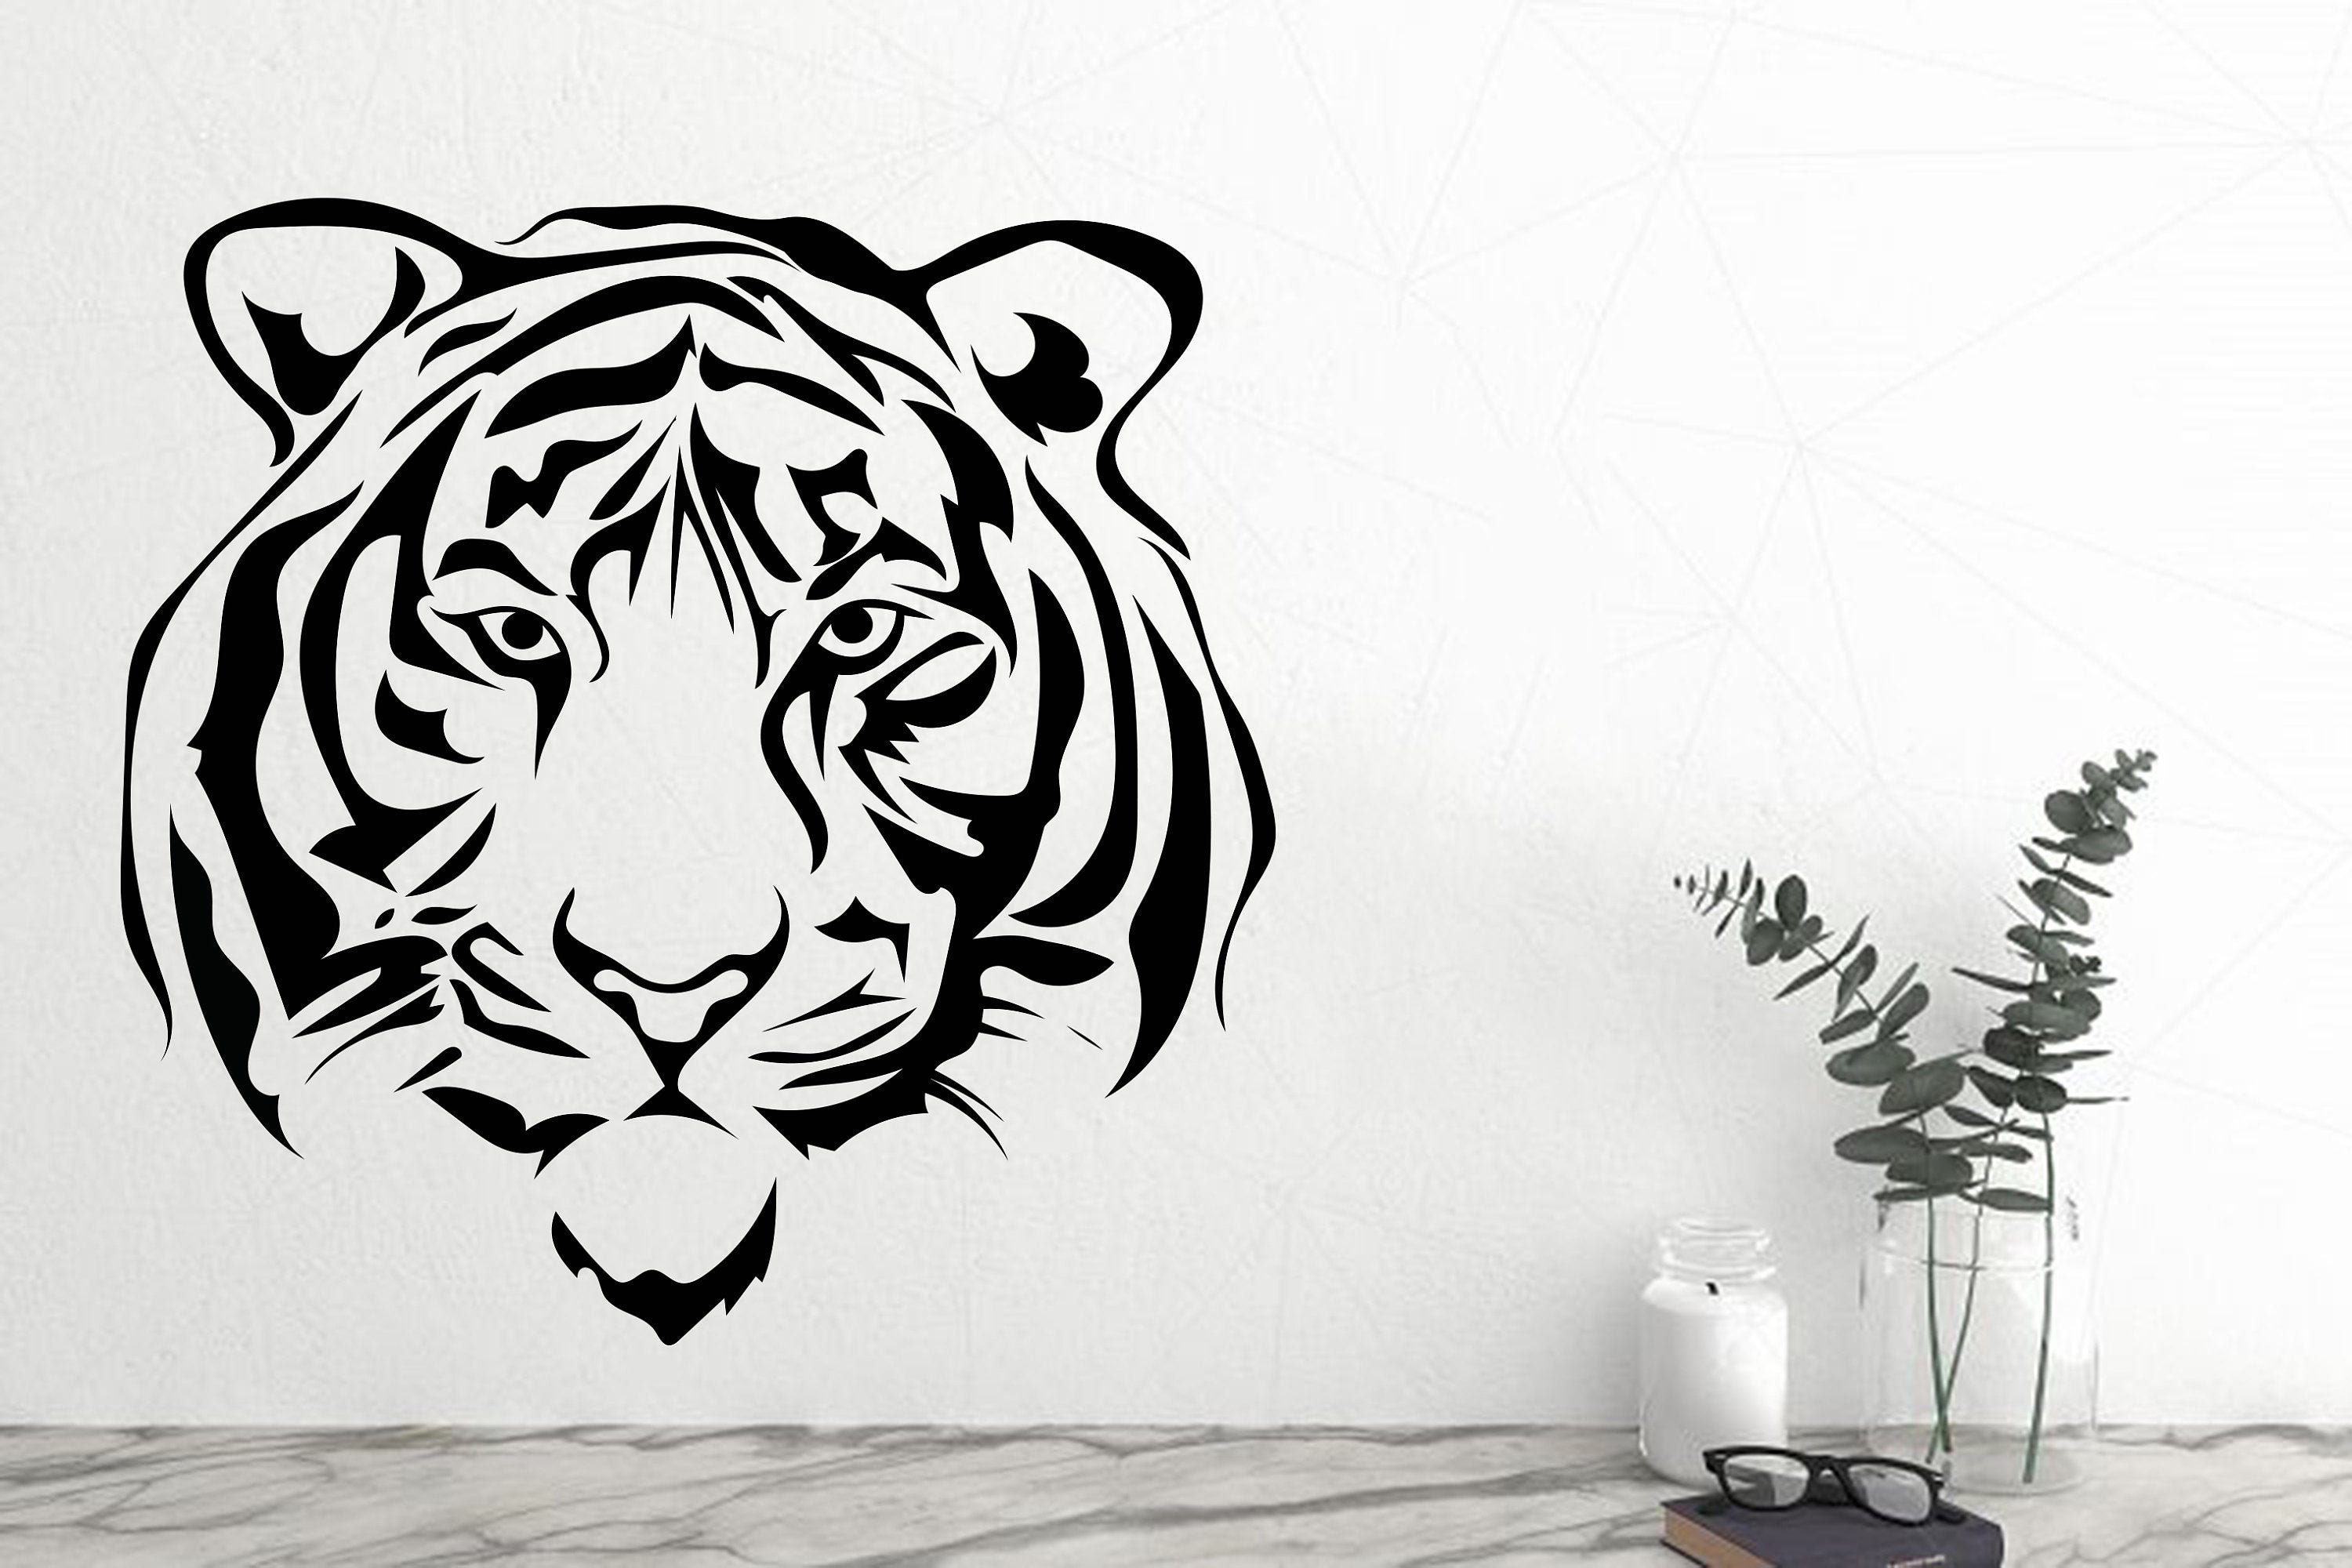 Cat Jungle Zoo Animal Tiger Wall Decal Decor Art Sticker Vinyl